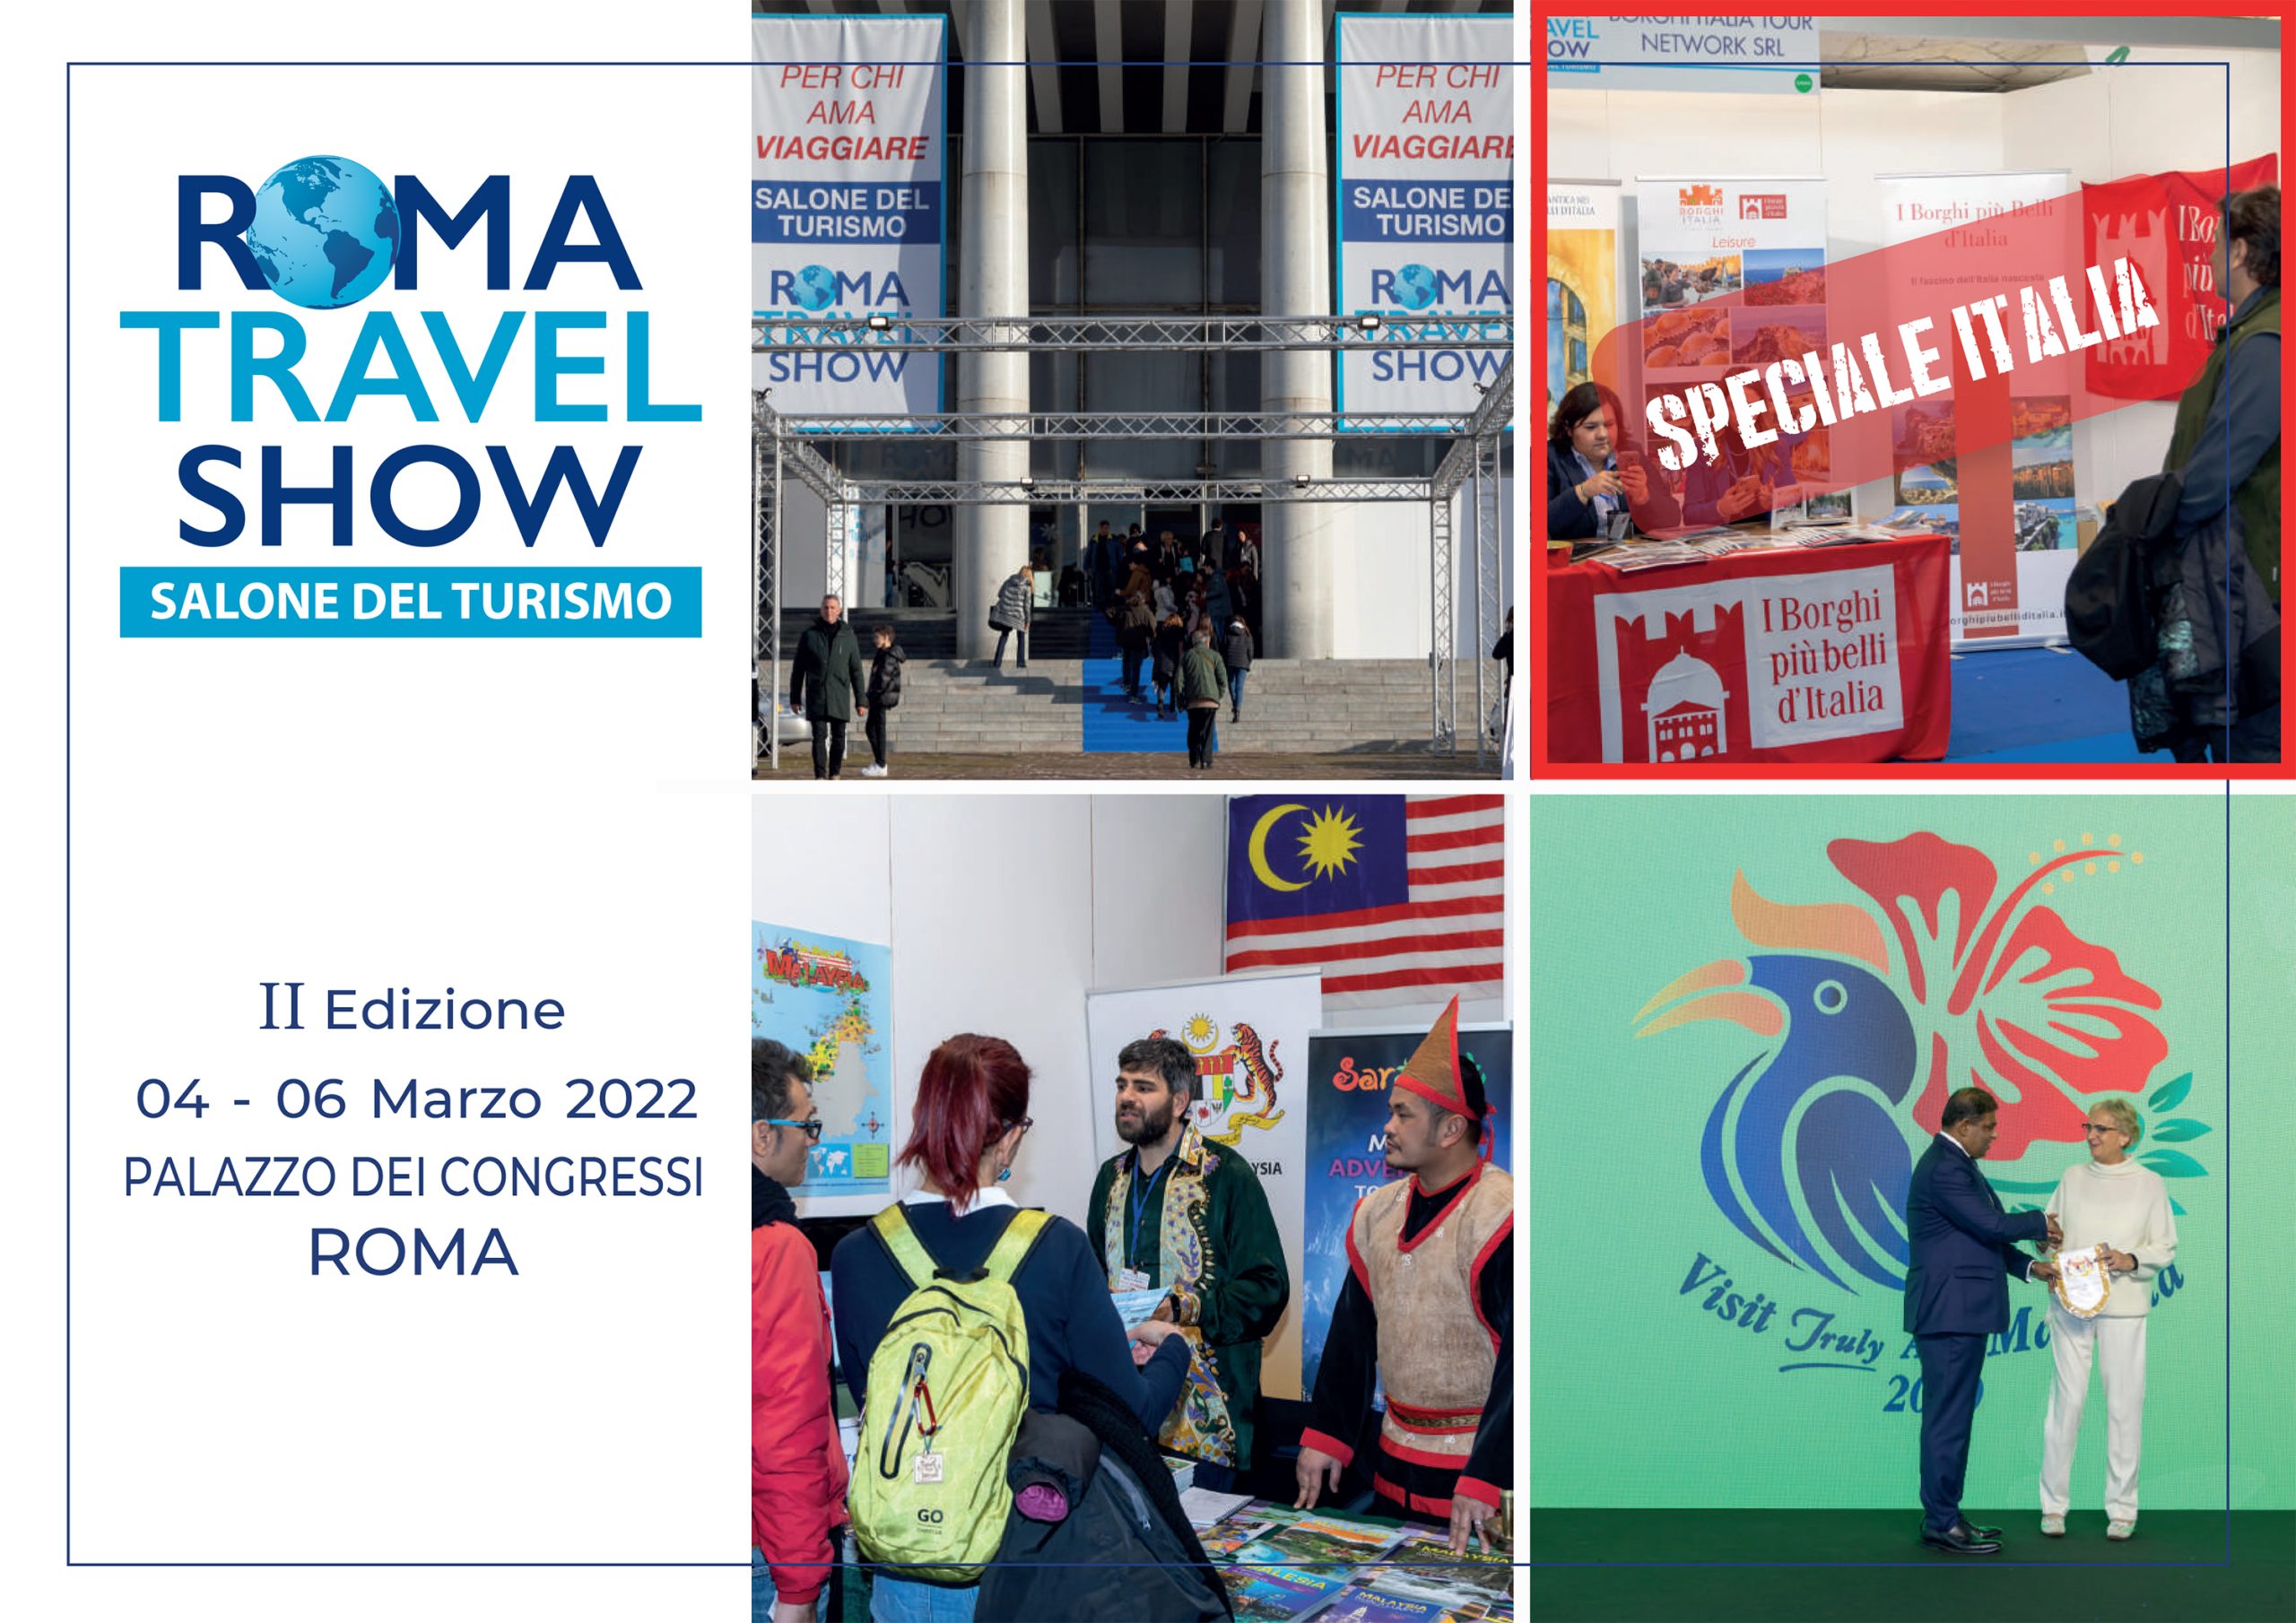 Roma Travel Show